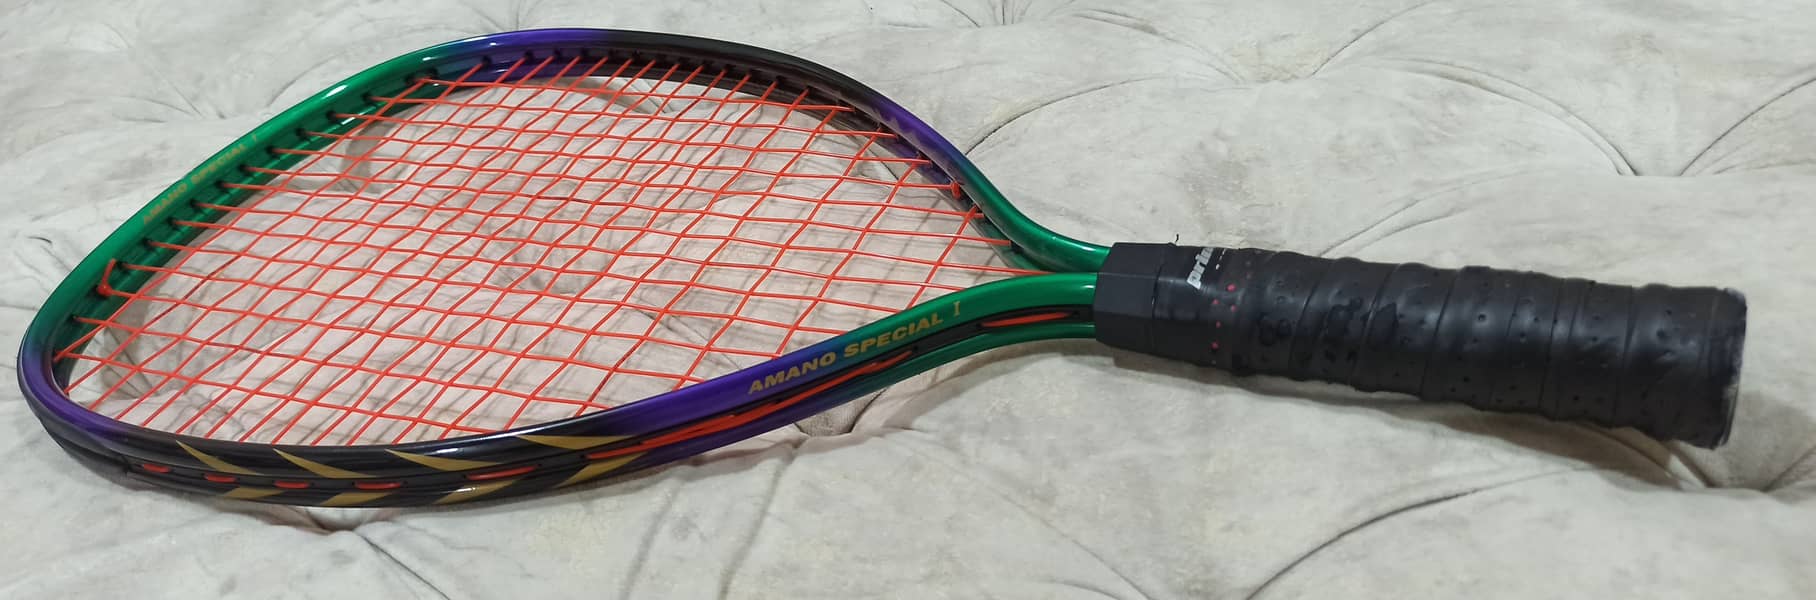 Prince Tennis Racket/ Racquet 1